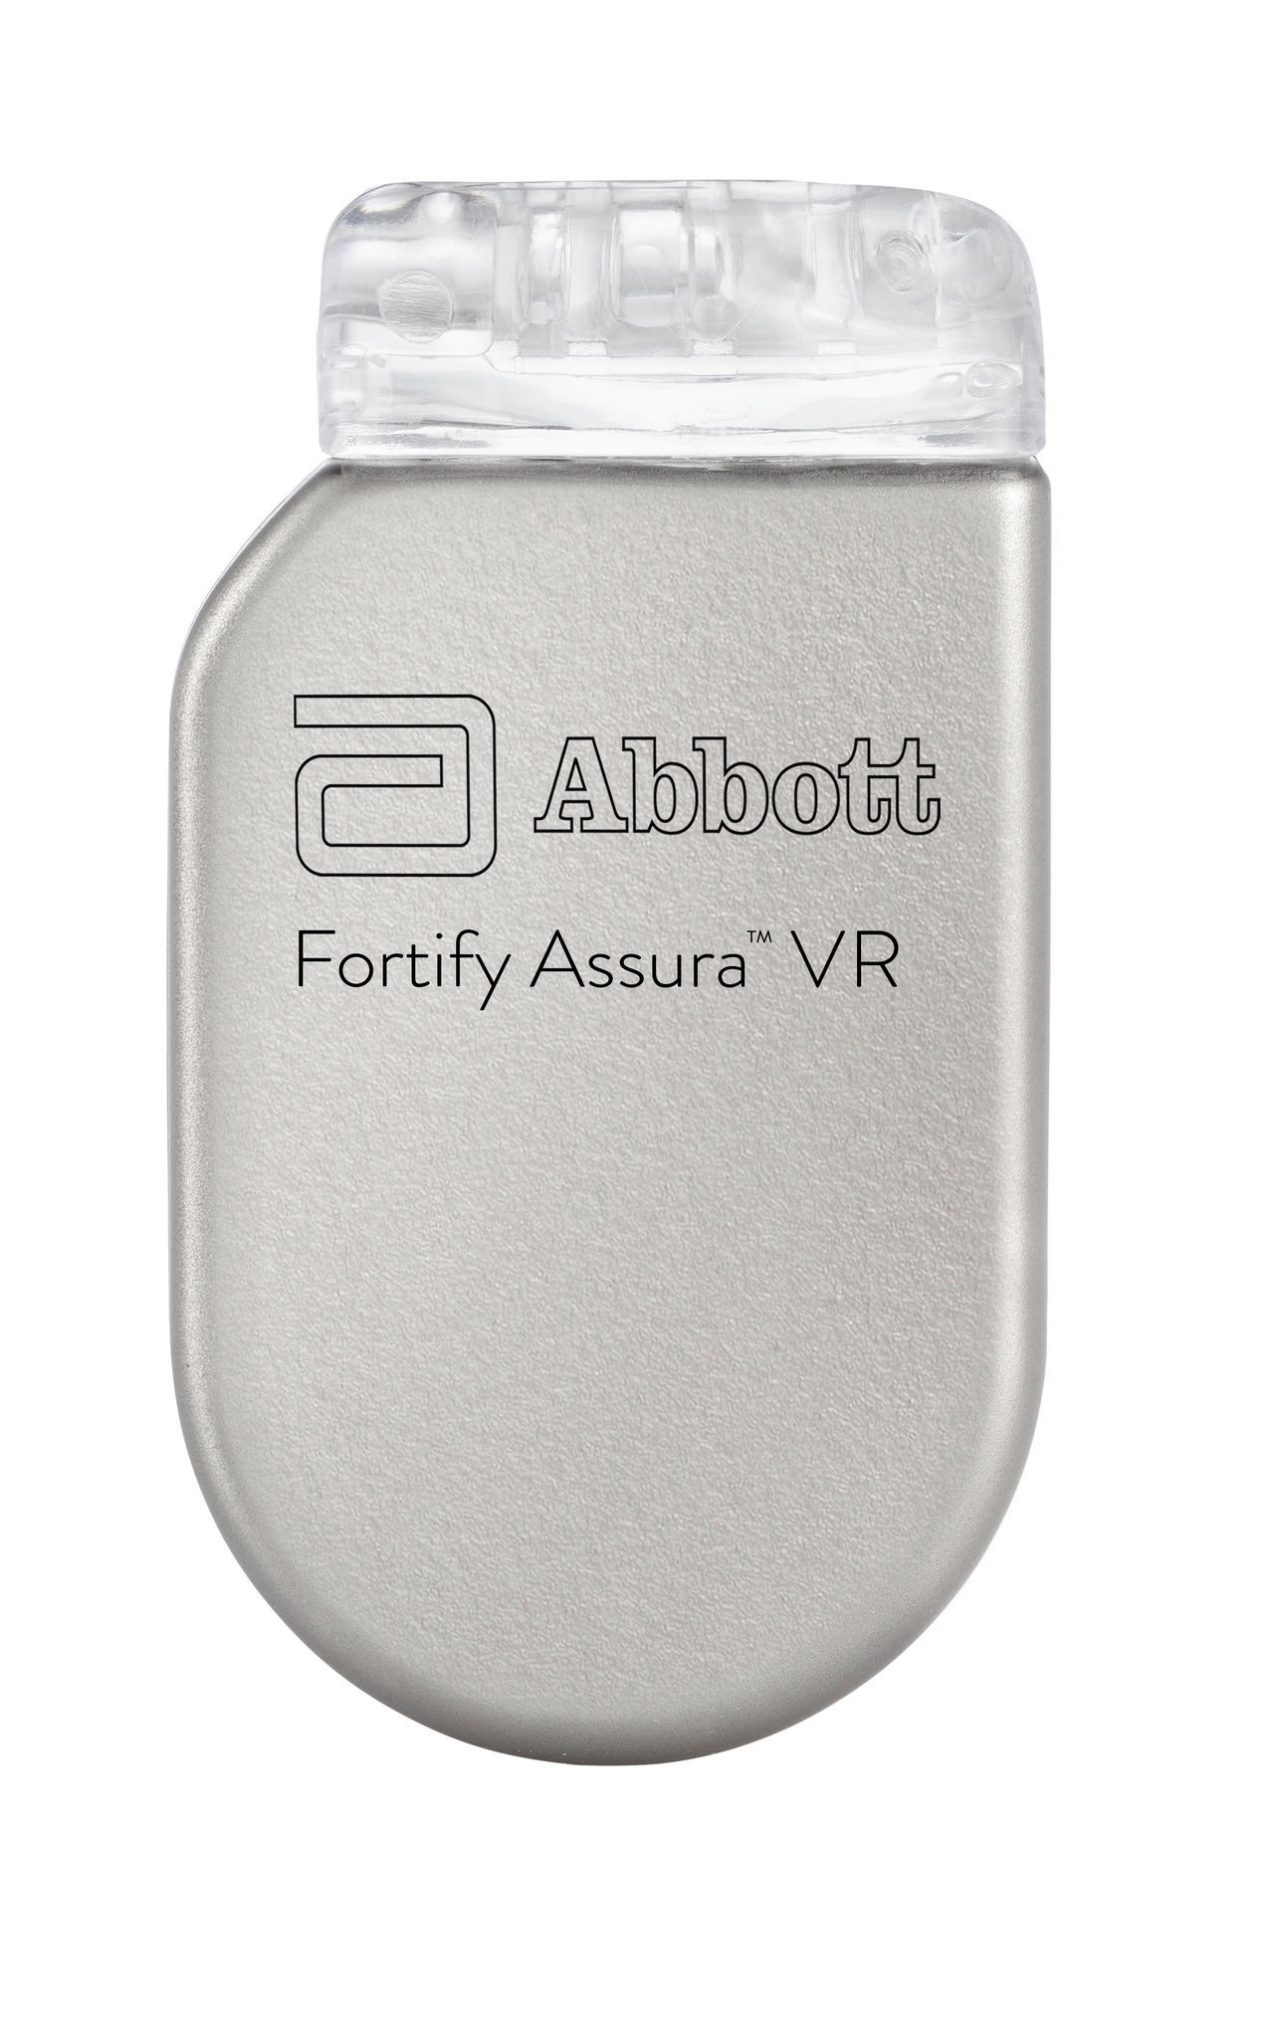 fortify assura VR